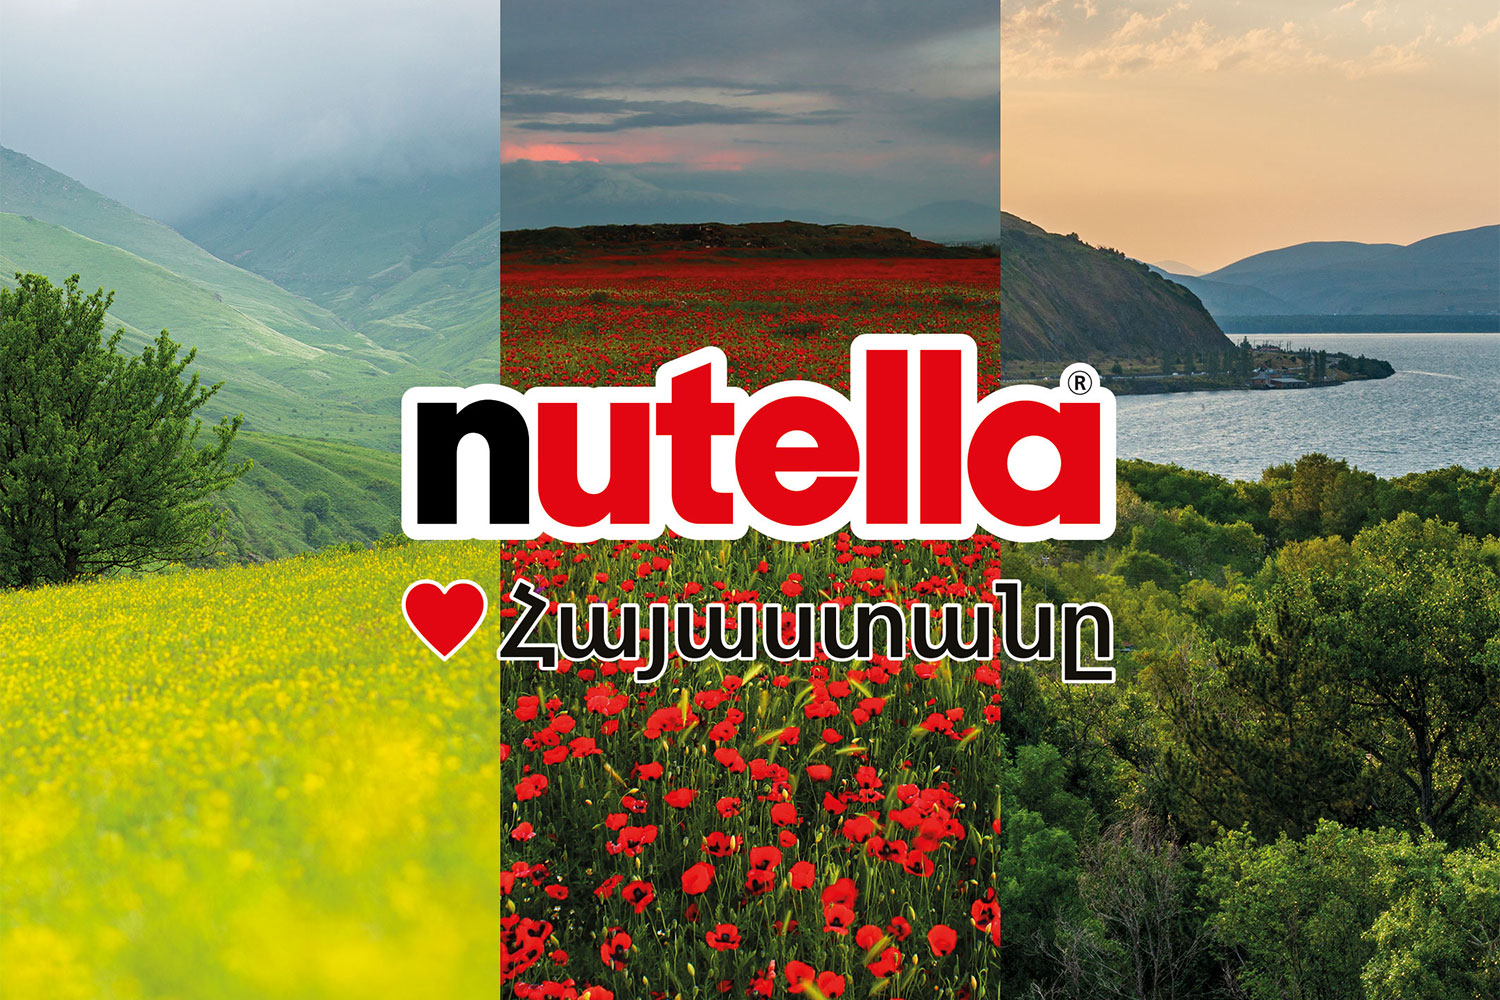 An inspiring journey through Armenia with Nutella